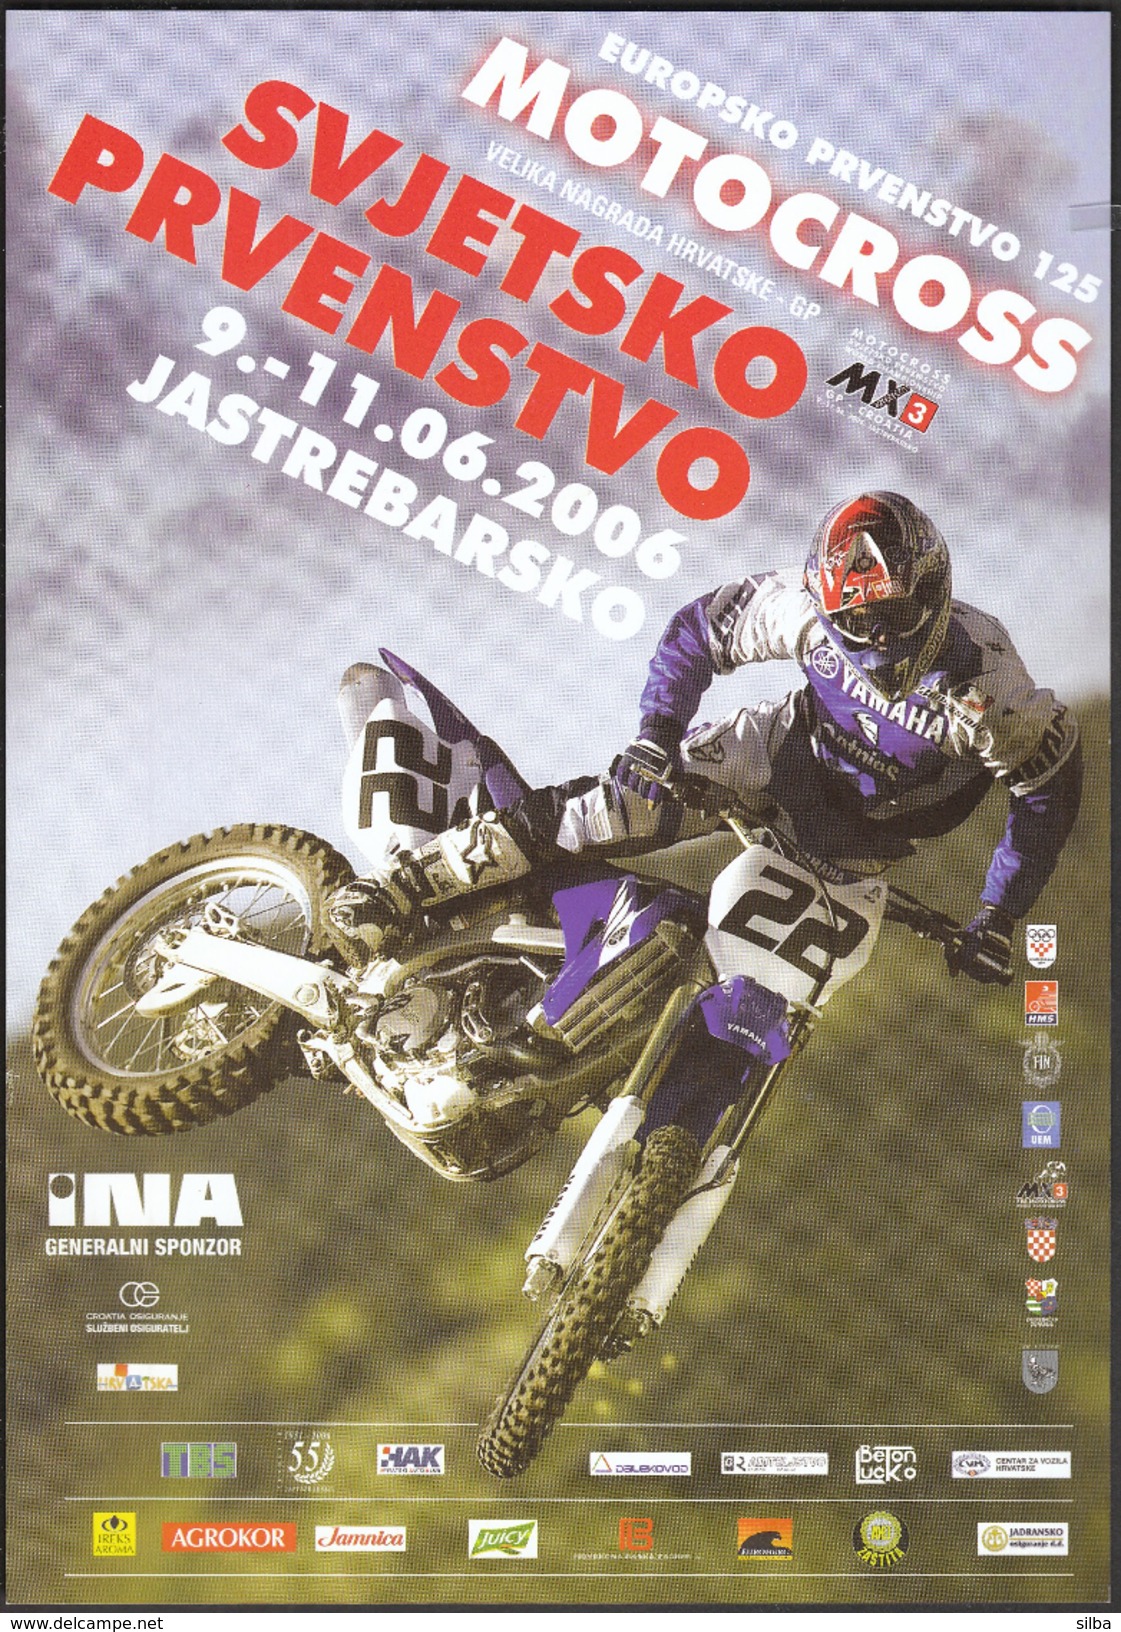 Croatia Jastrebarsko 2006 / TIMETABLE / Motocross Grand Prix Croatia / MX3 World Championship / 125 European Champ. - Europe